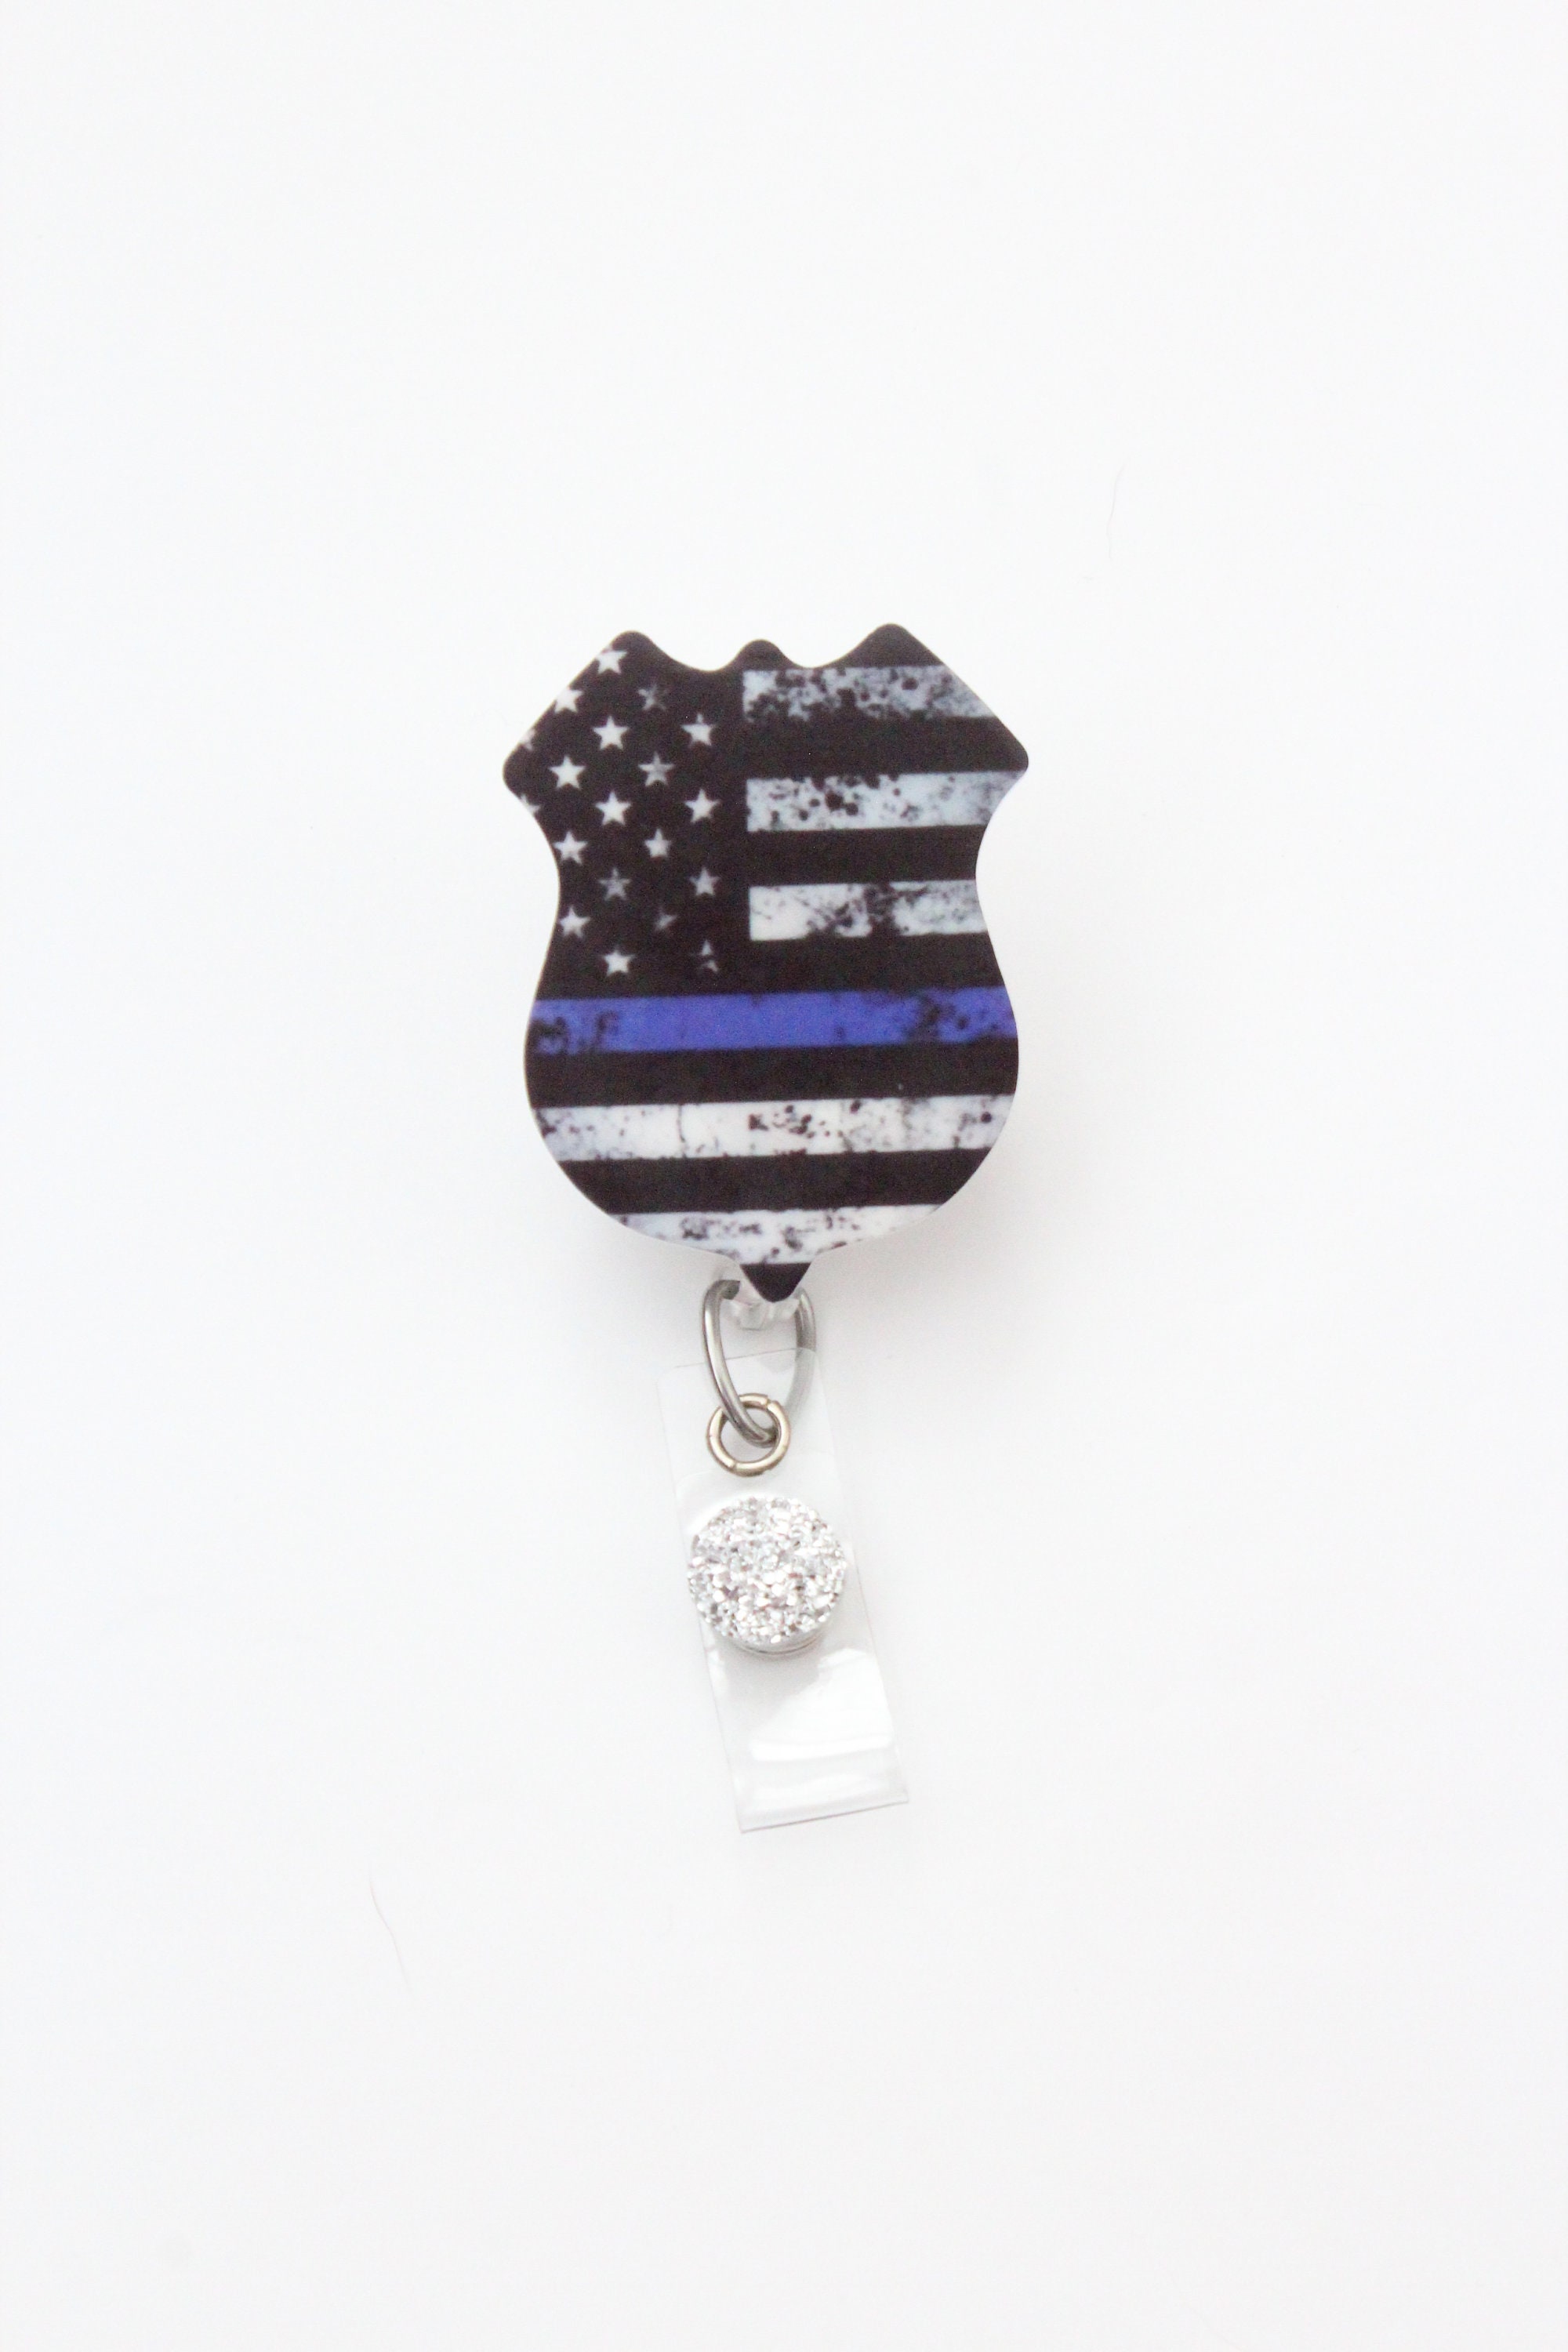 Police Badge Reel- Police Badge- Police ID Holder-Police- Police Gift- Custom Badge Reel